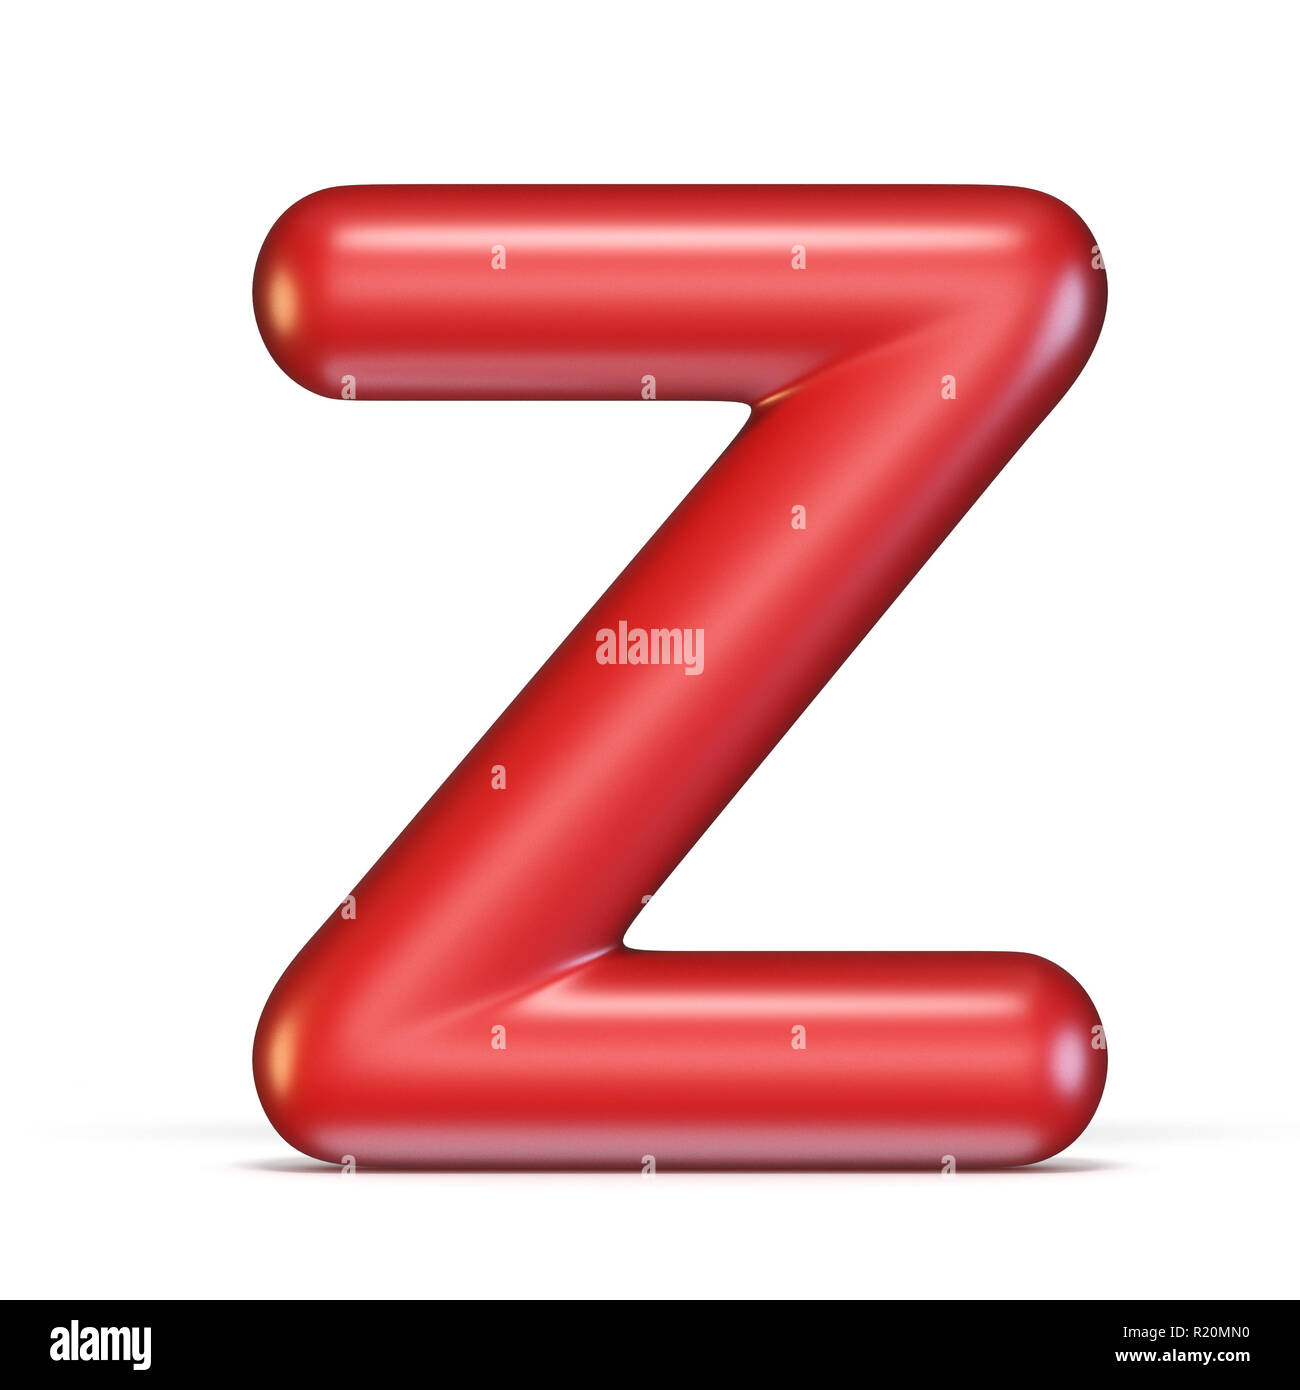 letter z different fonts